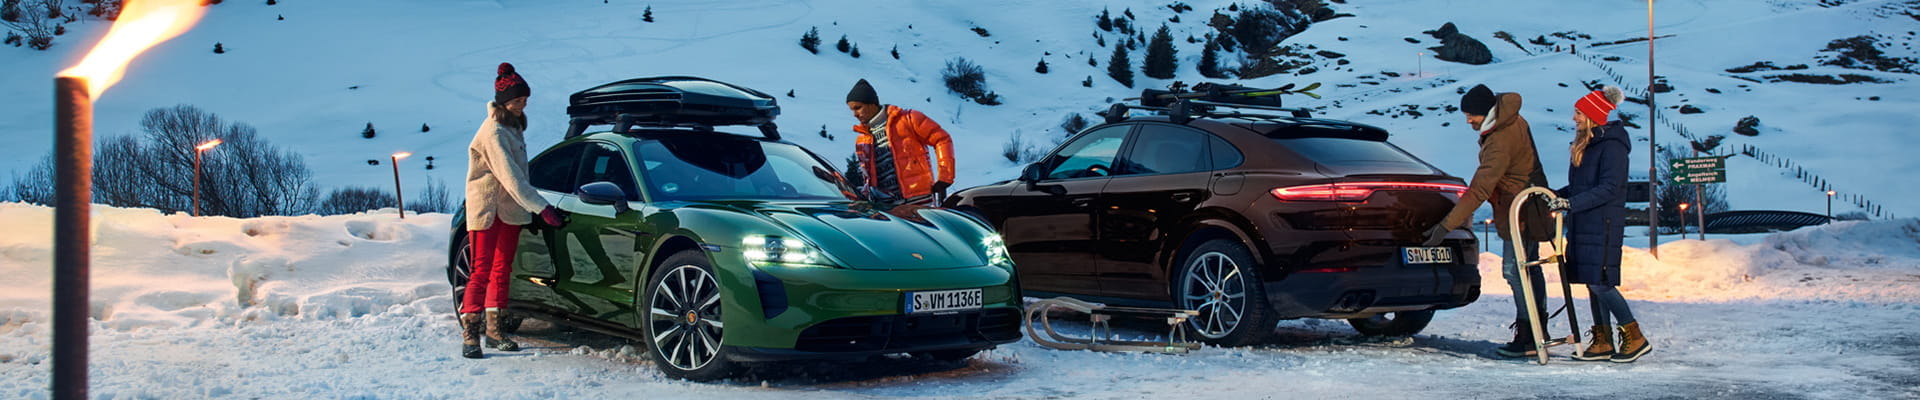 Porsche Rive-Sud - Offre support à skis/snowboard